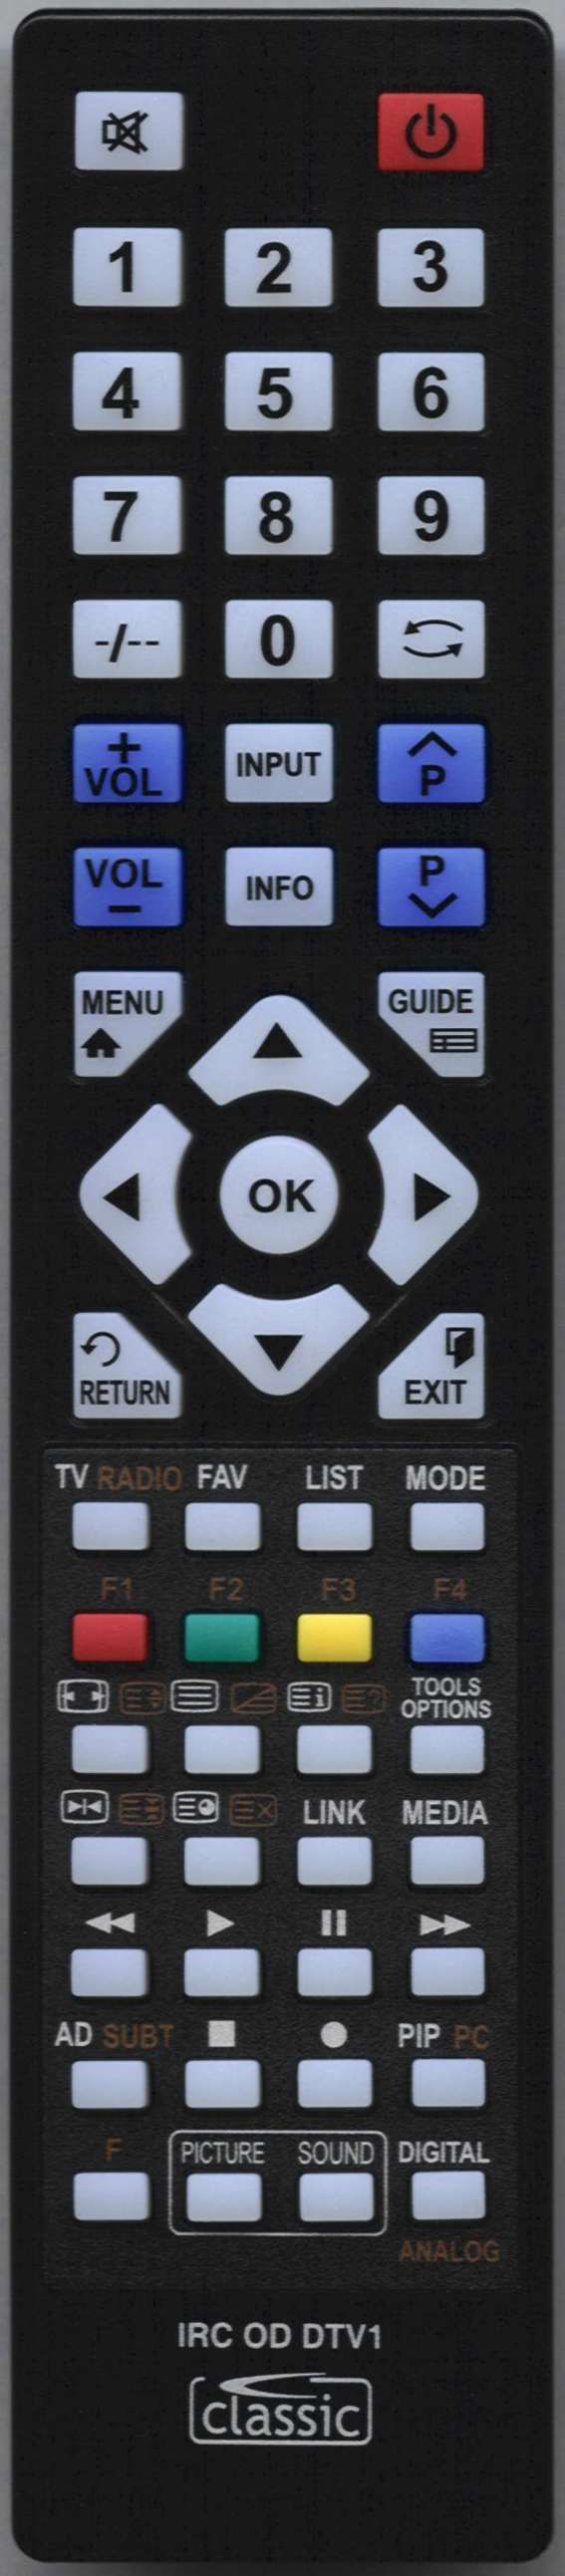 DIGITREX CFD-1971C Remote Control